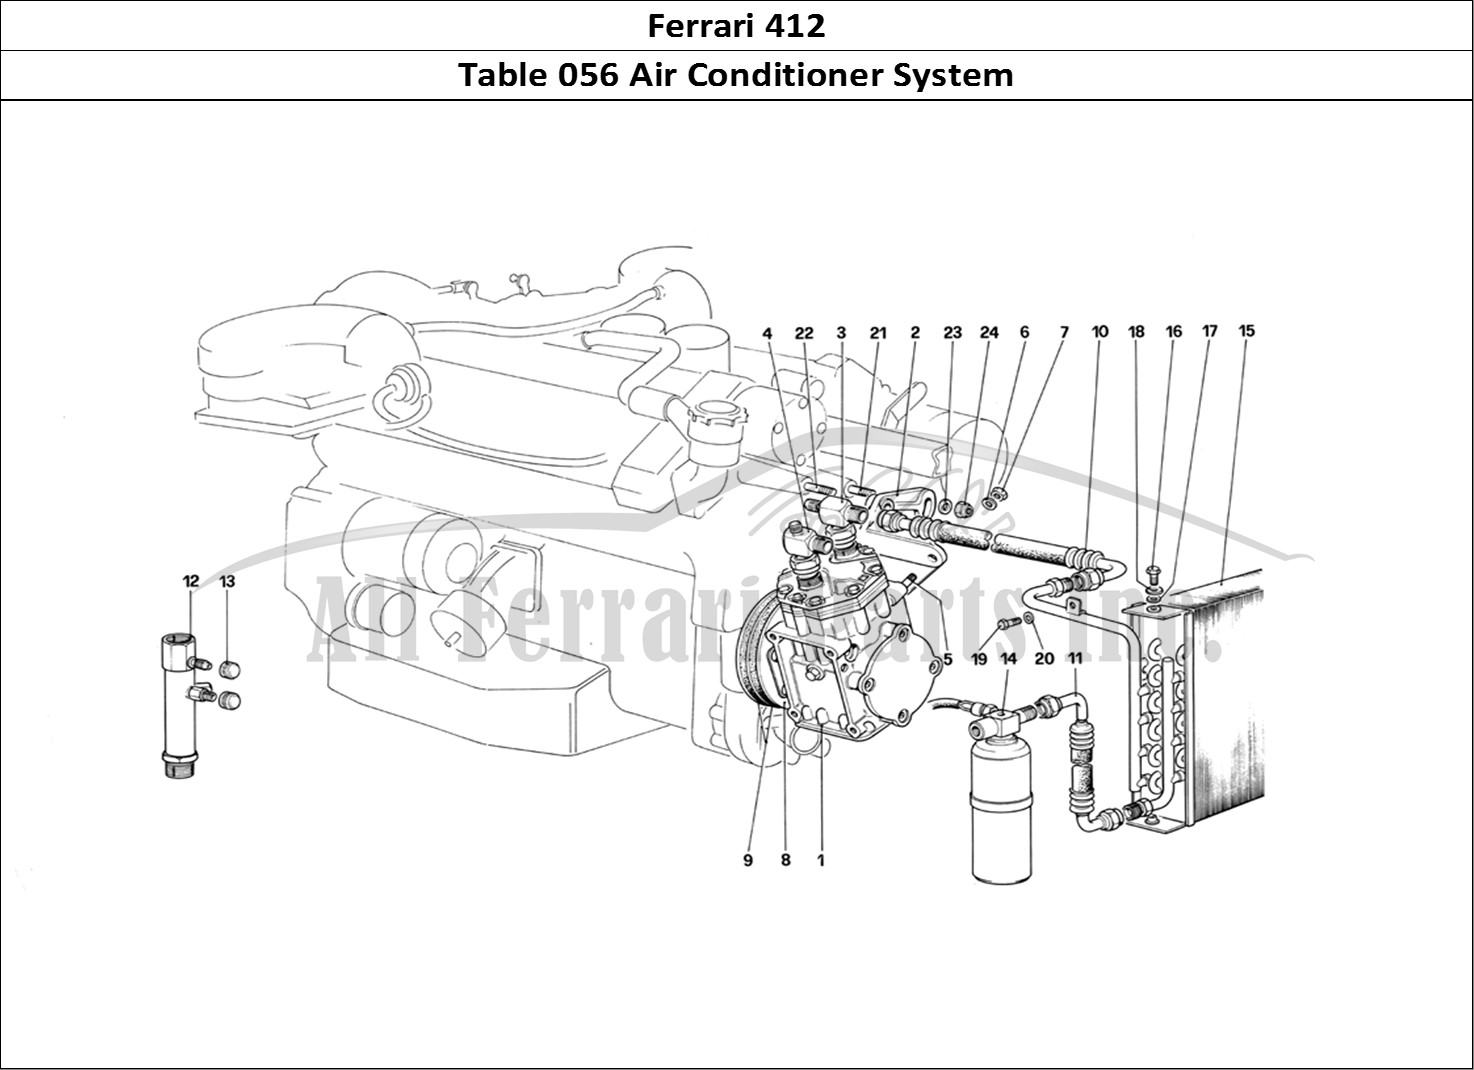 Ferrari Parts Ferrari 412 (Mechanical) Page 056 Air Conditioning System